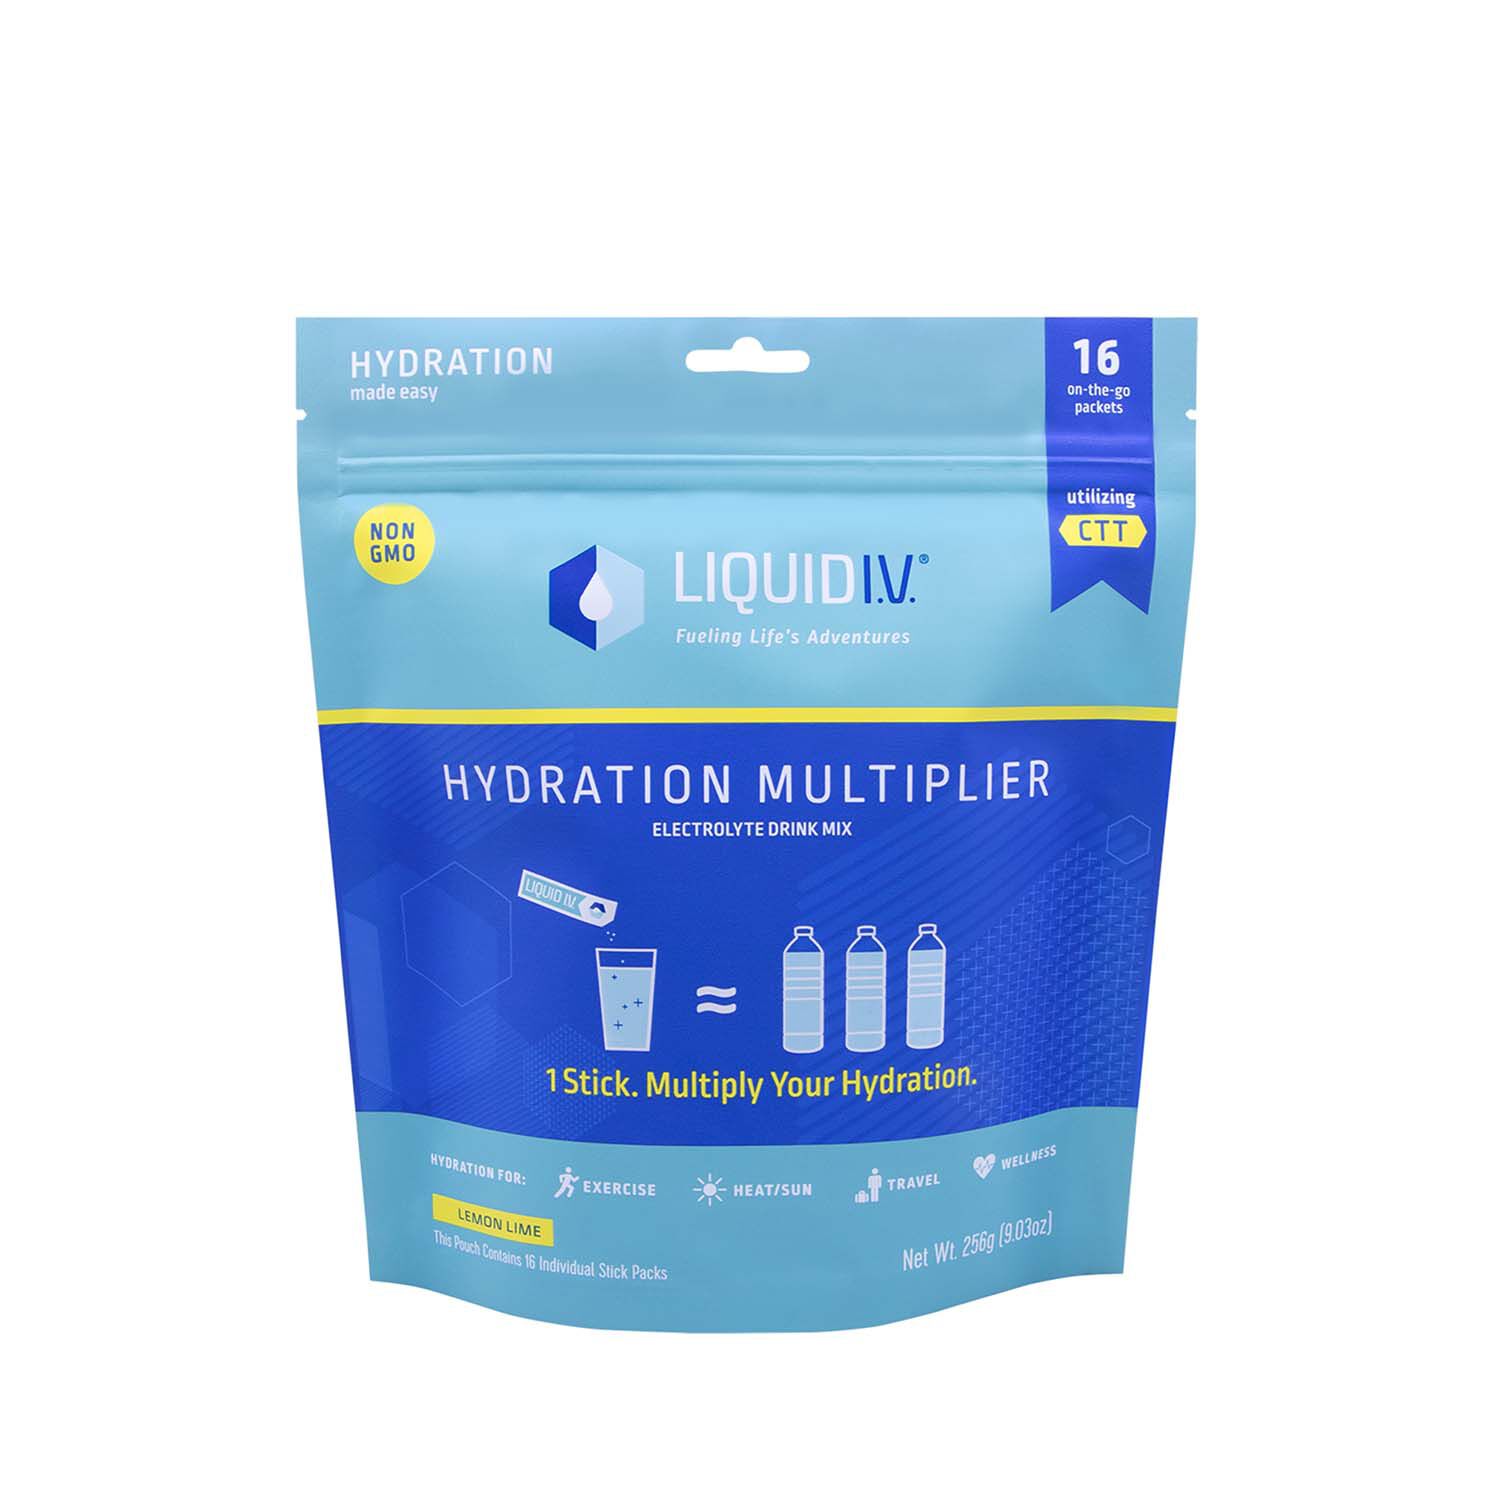 does liquid iv hydration multiplier work